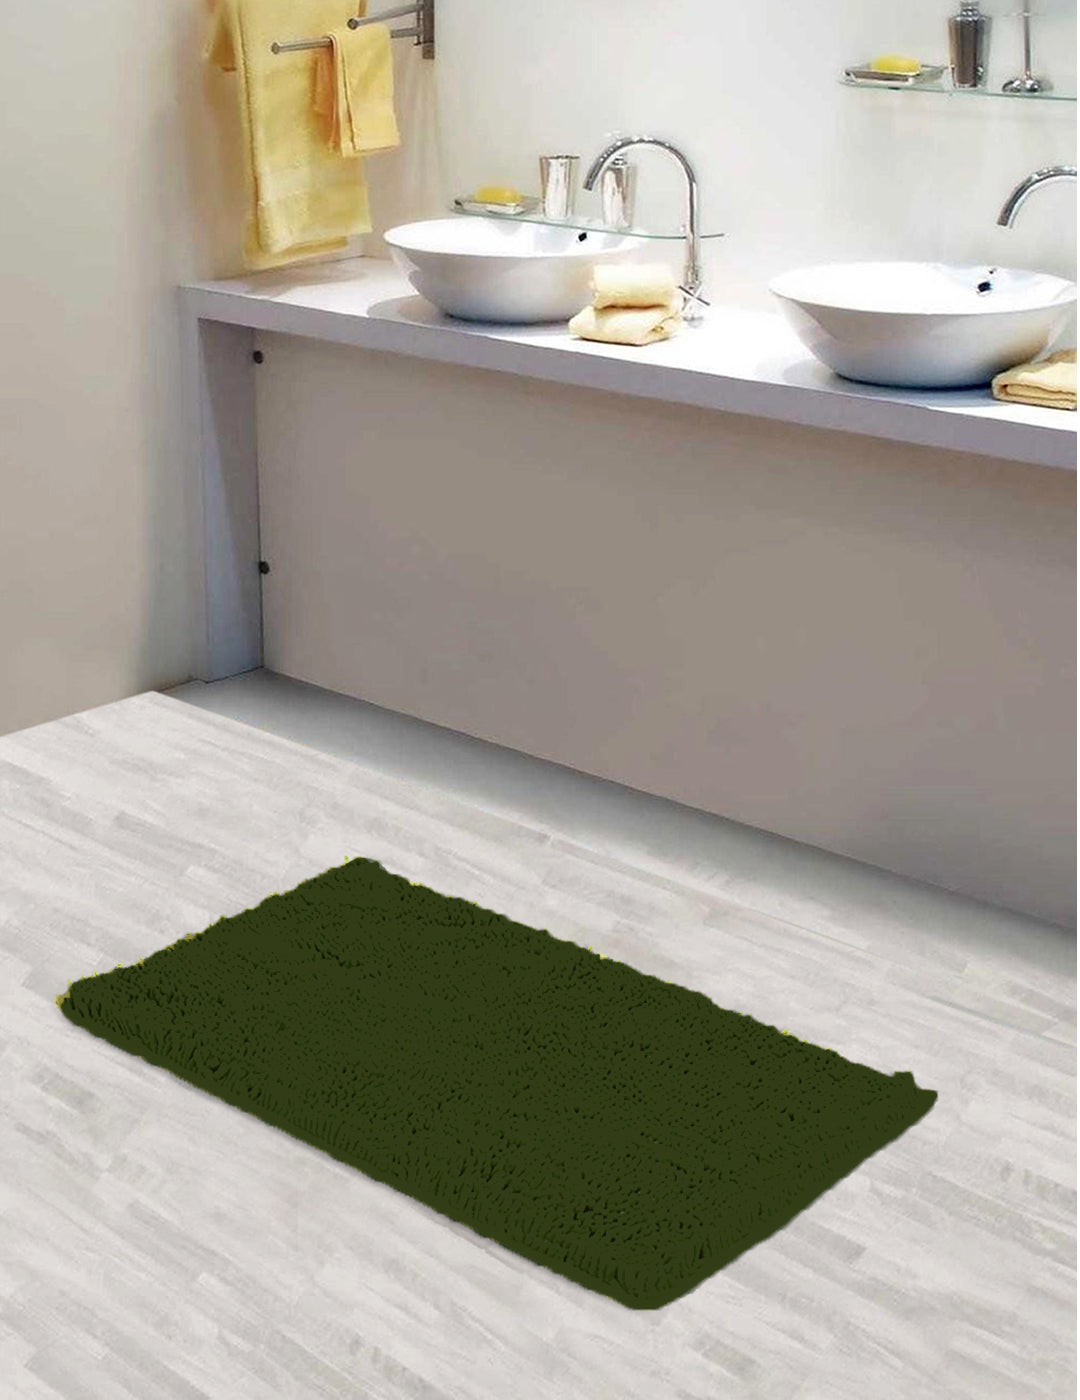 Lushomes bathroom mat, anti slip mat for bathroom floor, 1200 GSM Floor Mat with High Pile Microfiber, door mats for bathroom (16 x 24 Inch, Single Pc, Green)